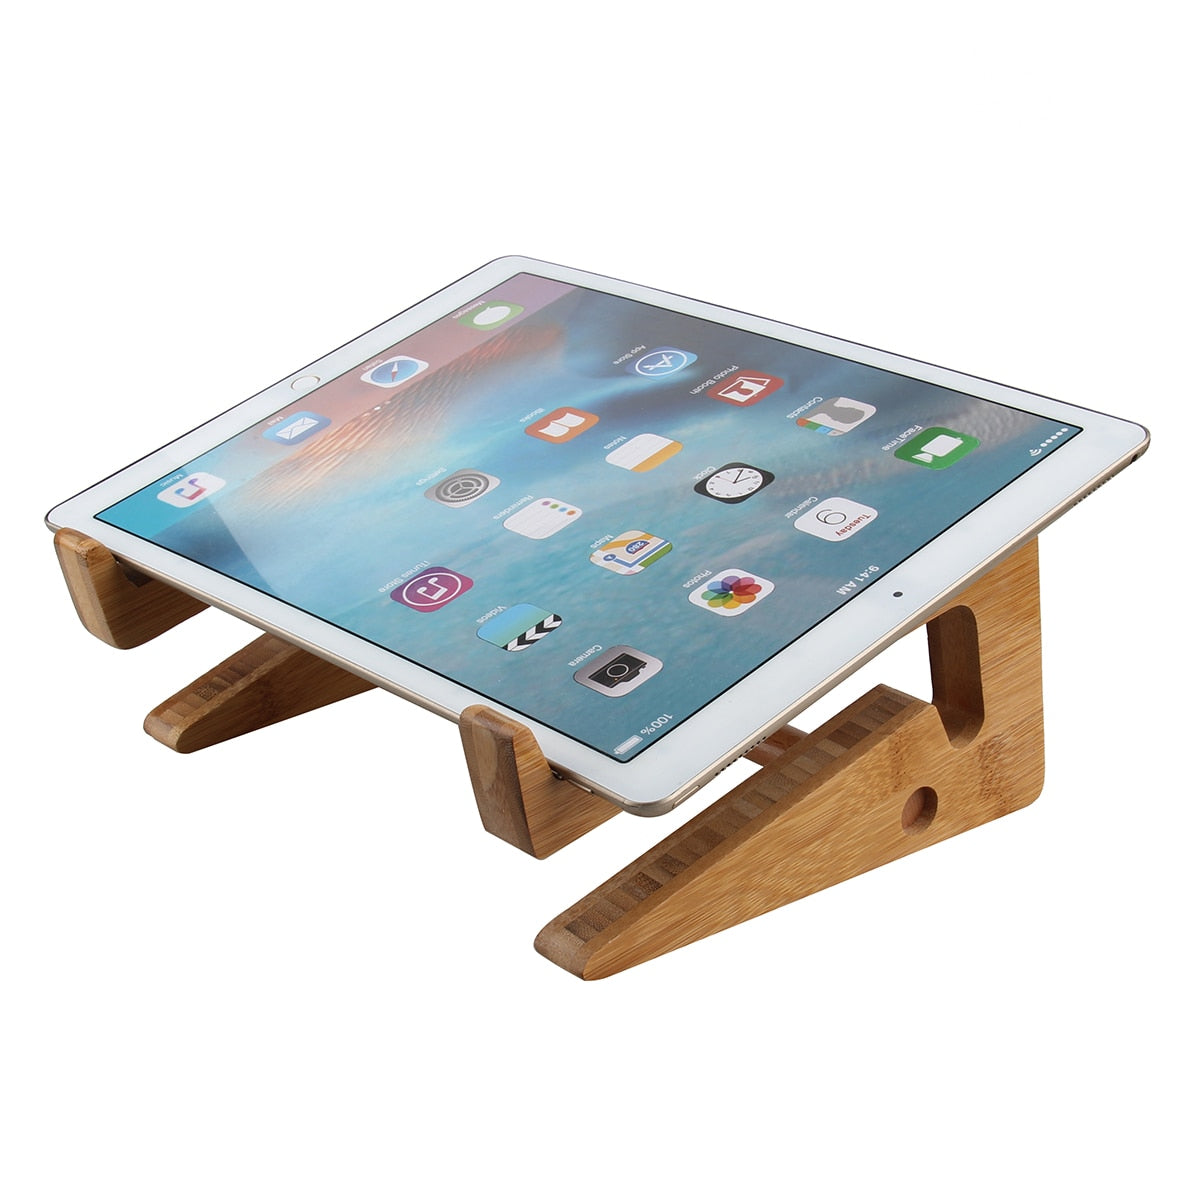 Creative Universal Wooden Detachable Laptop Stand